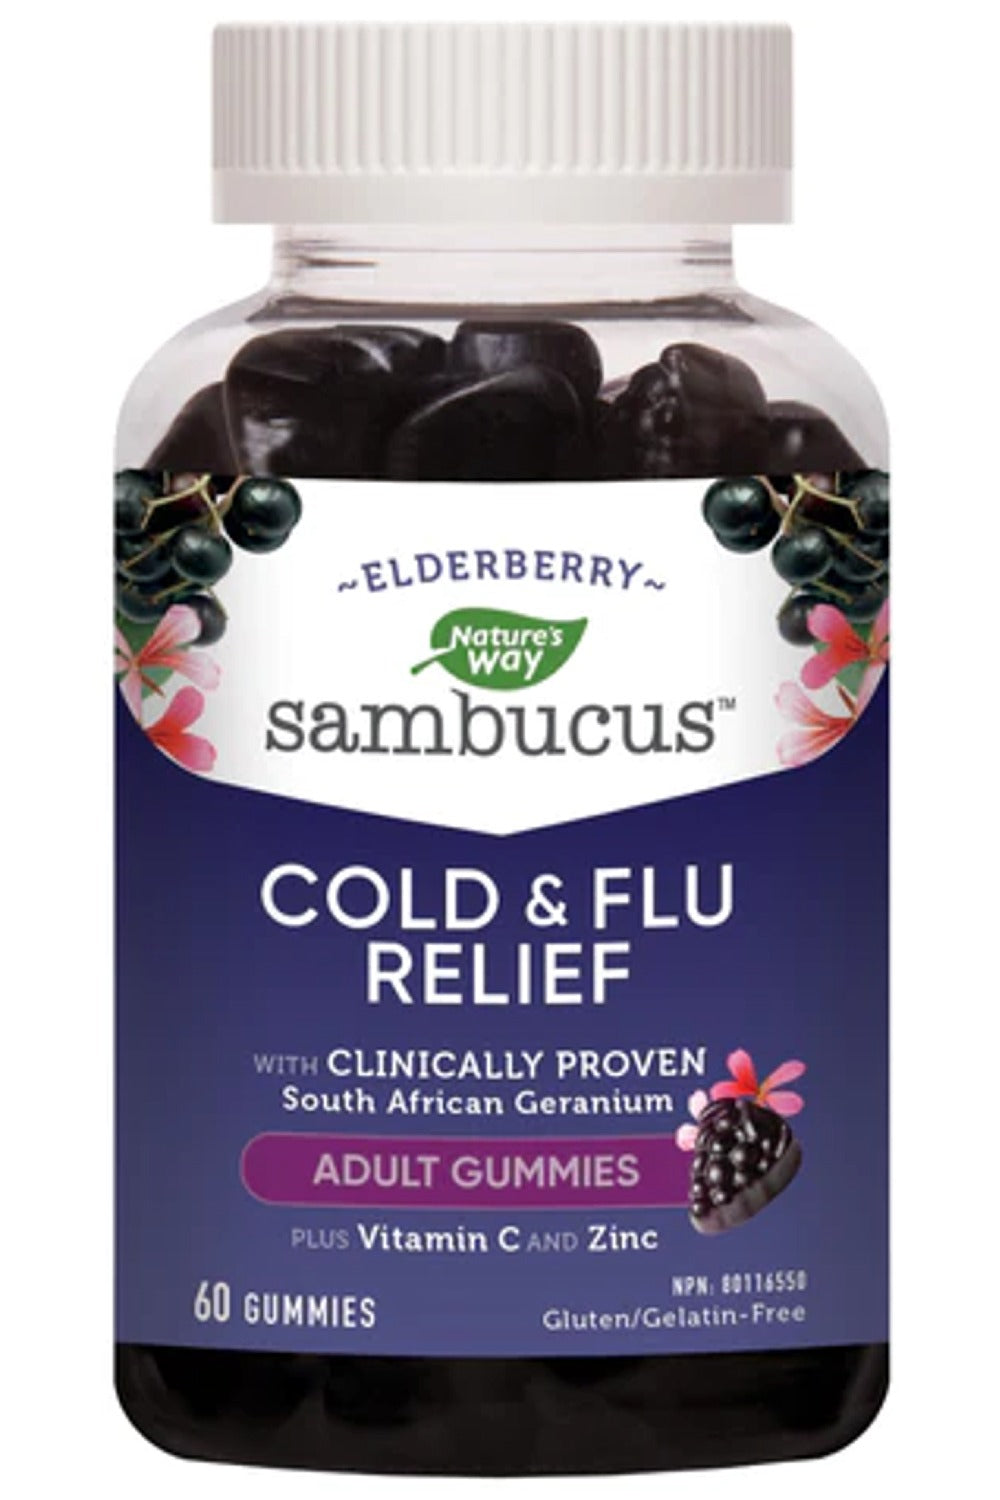 NATURES WAY Sambucus Cold & Flu Relief (60 Adult Gummies)